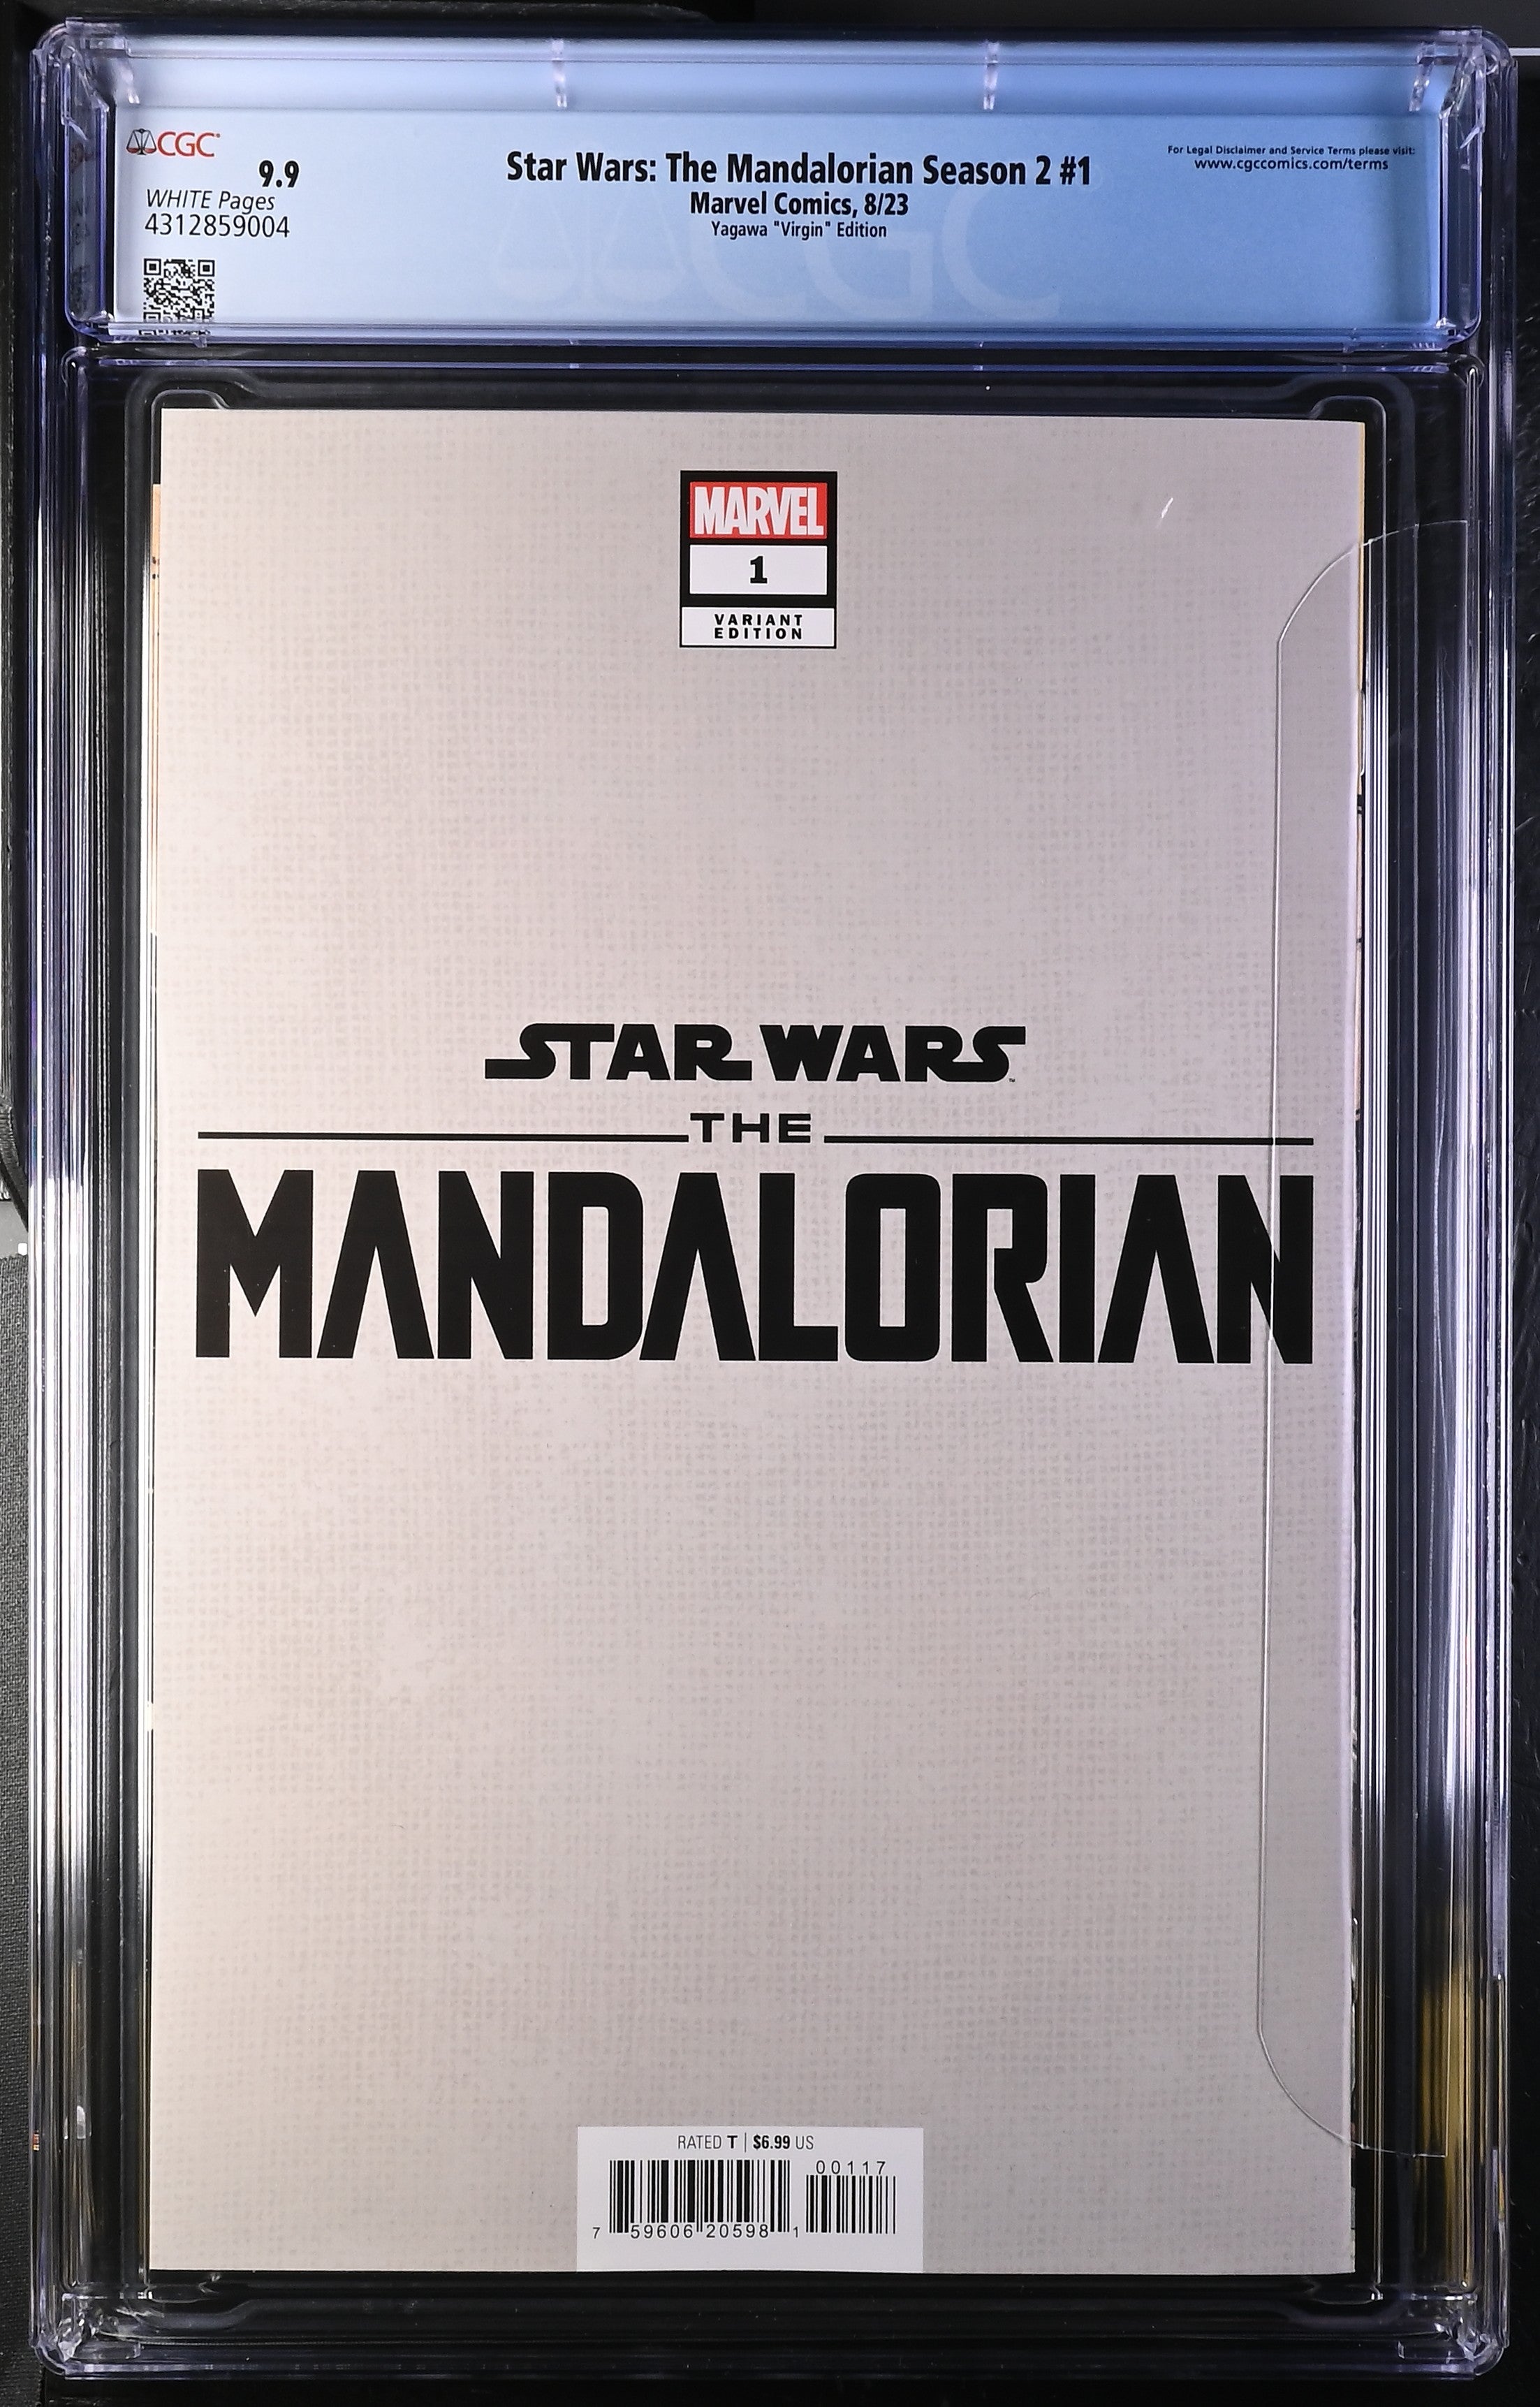 Star Wars: The Mandalorian Season 2 #1 Marvel Comics CGC Universal Grade 9.9 MINT GalaxyCon